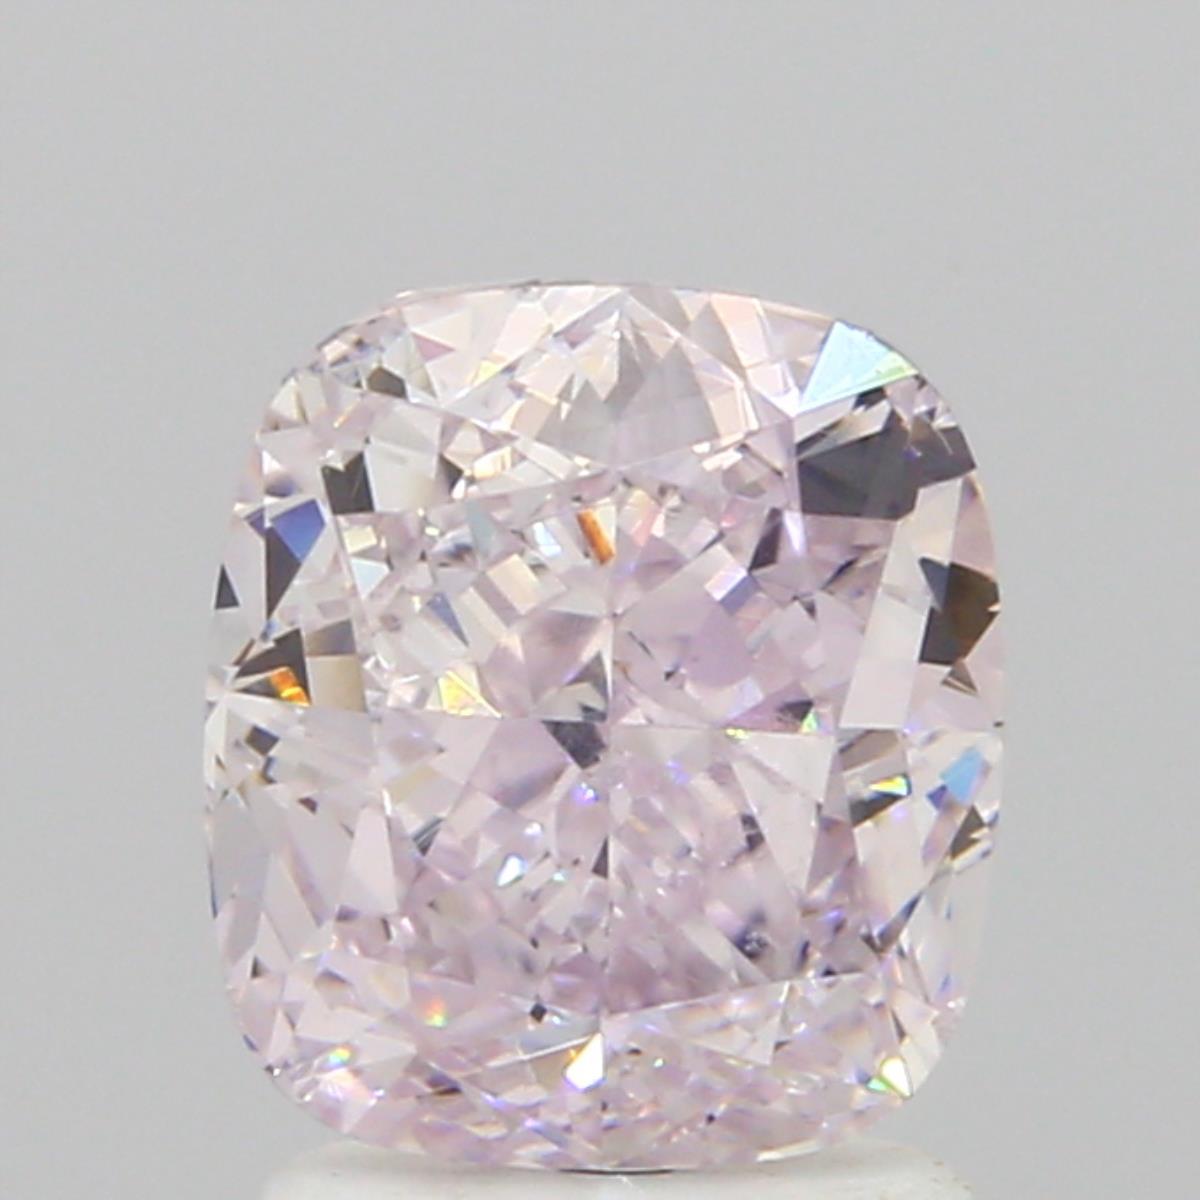 2.01 Carat Cushion Loose Diamond, , VS2, Excellent, GIA Certified | Thumbnail